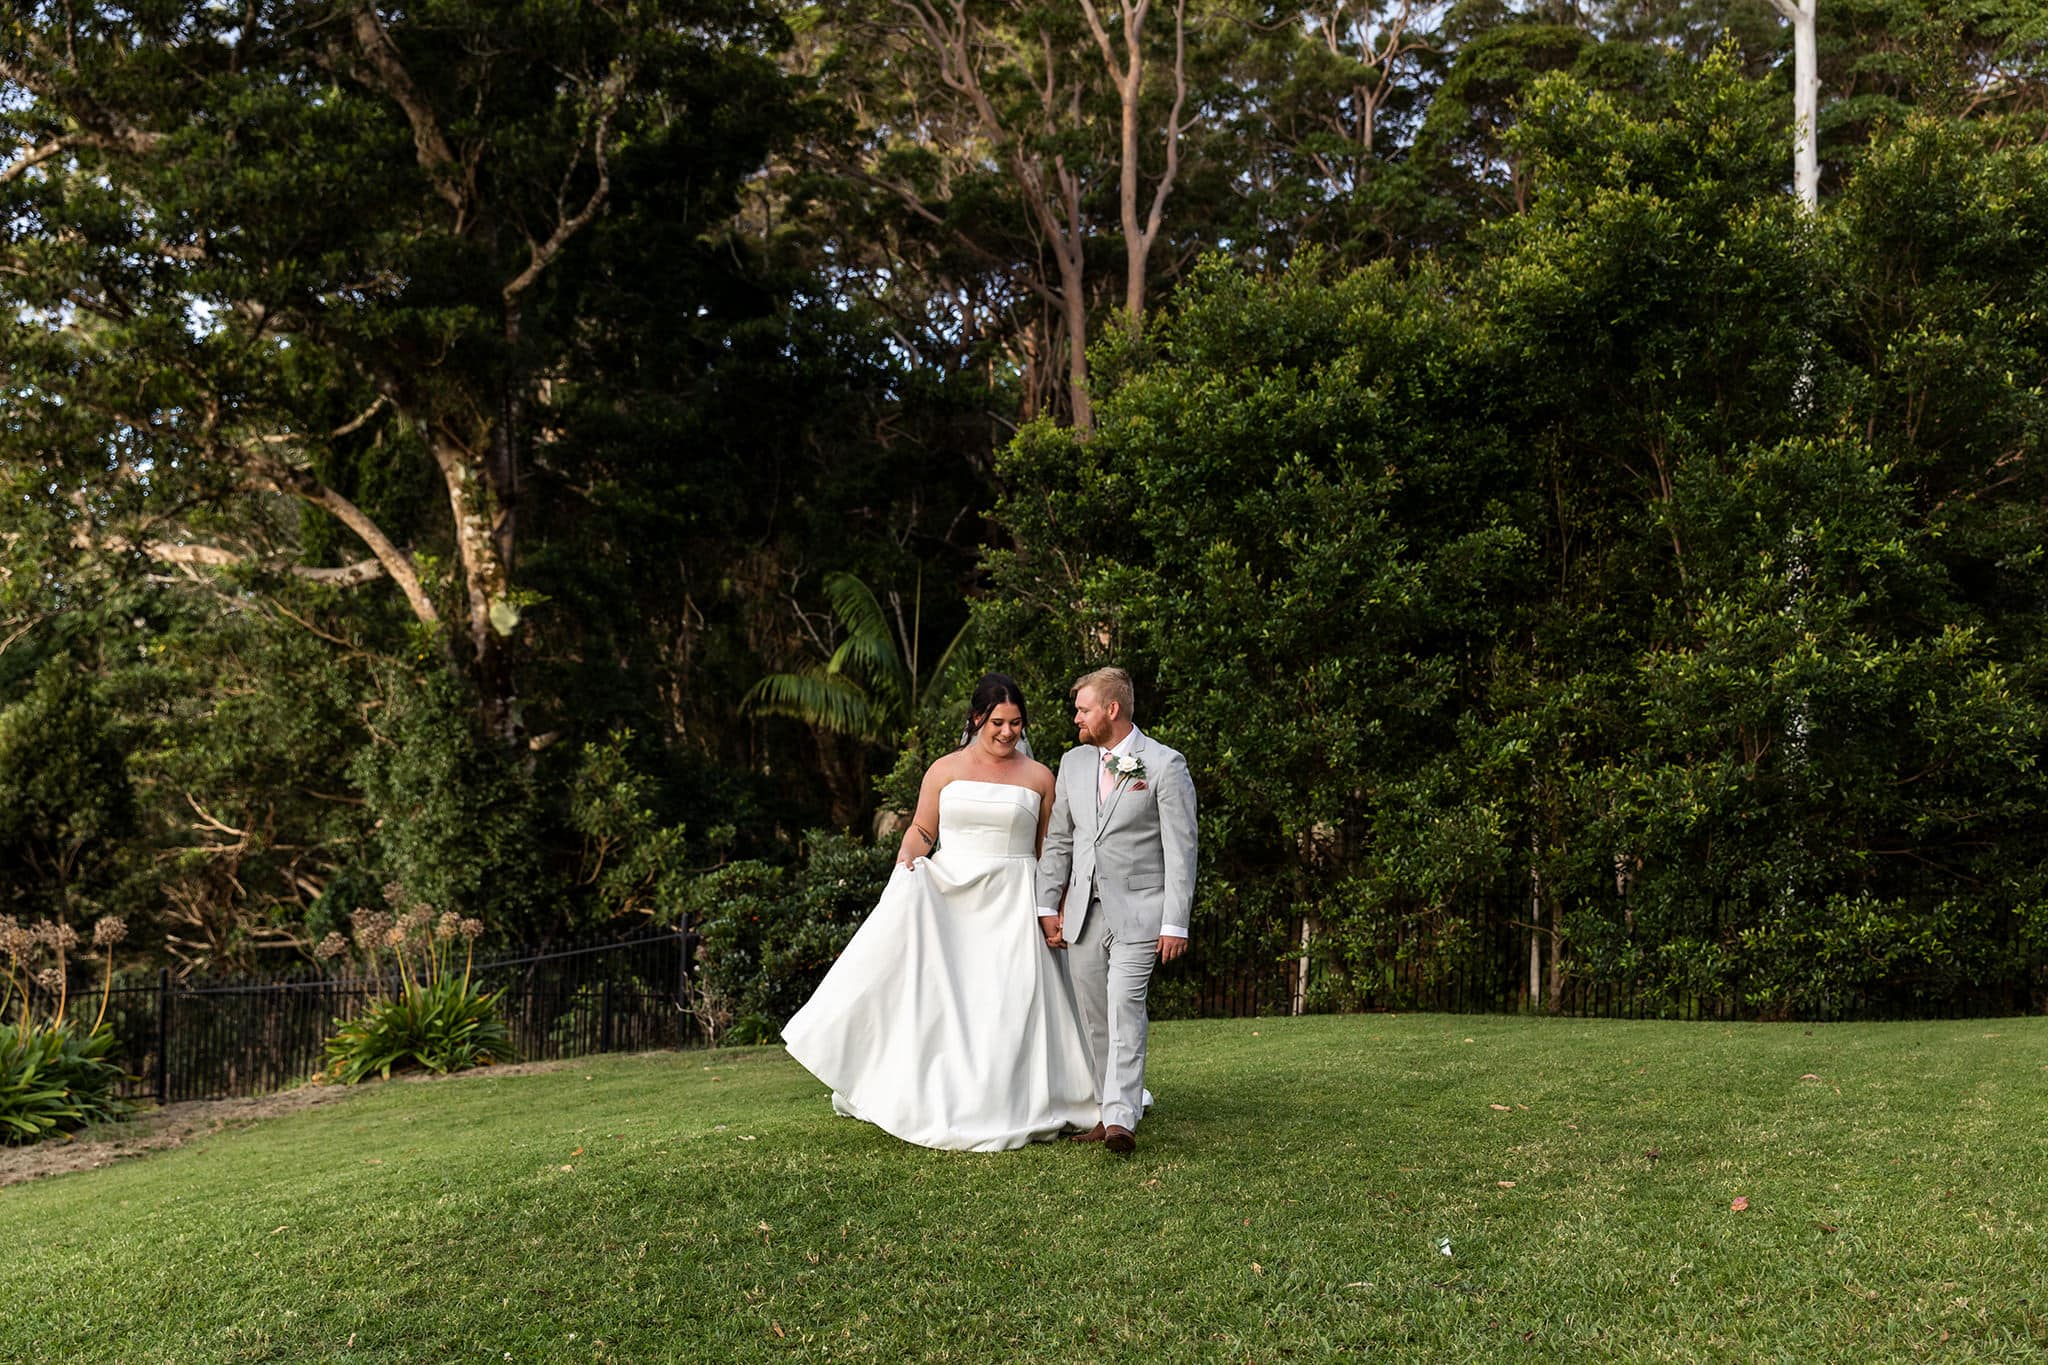 Bride and groom at their wedding at Tamborine Mountain, St Bernard's Hotel, wedding venue.